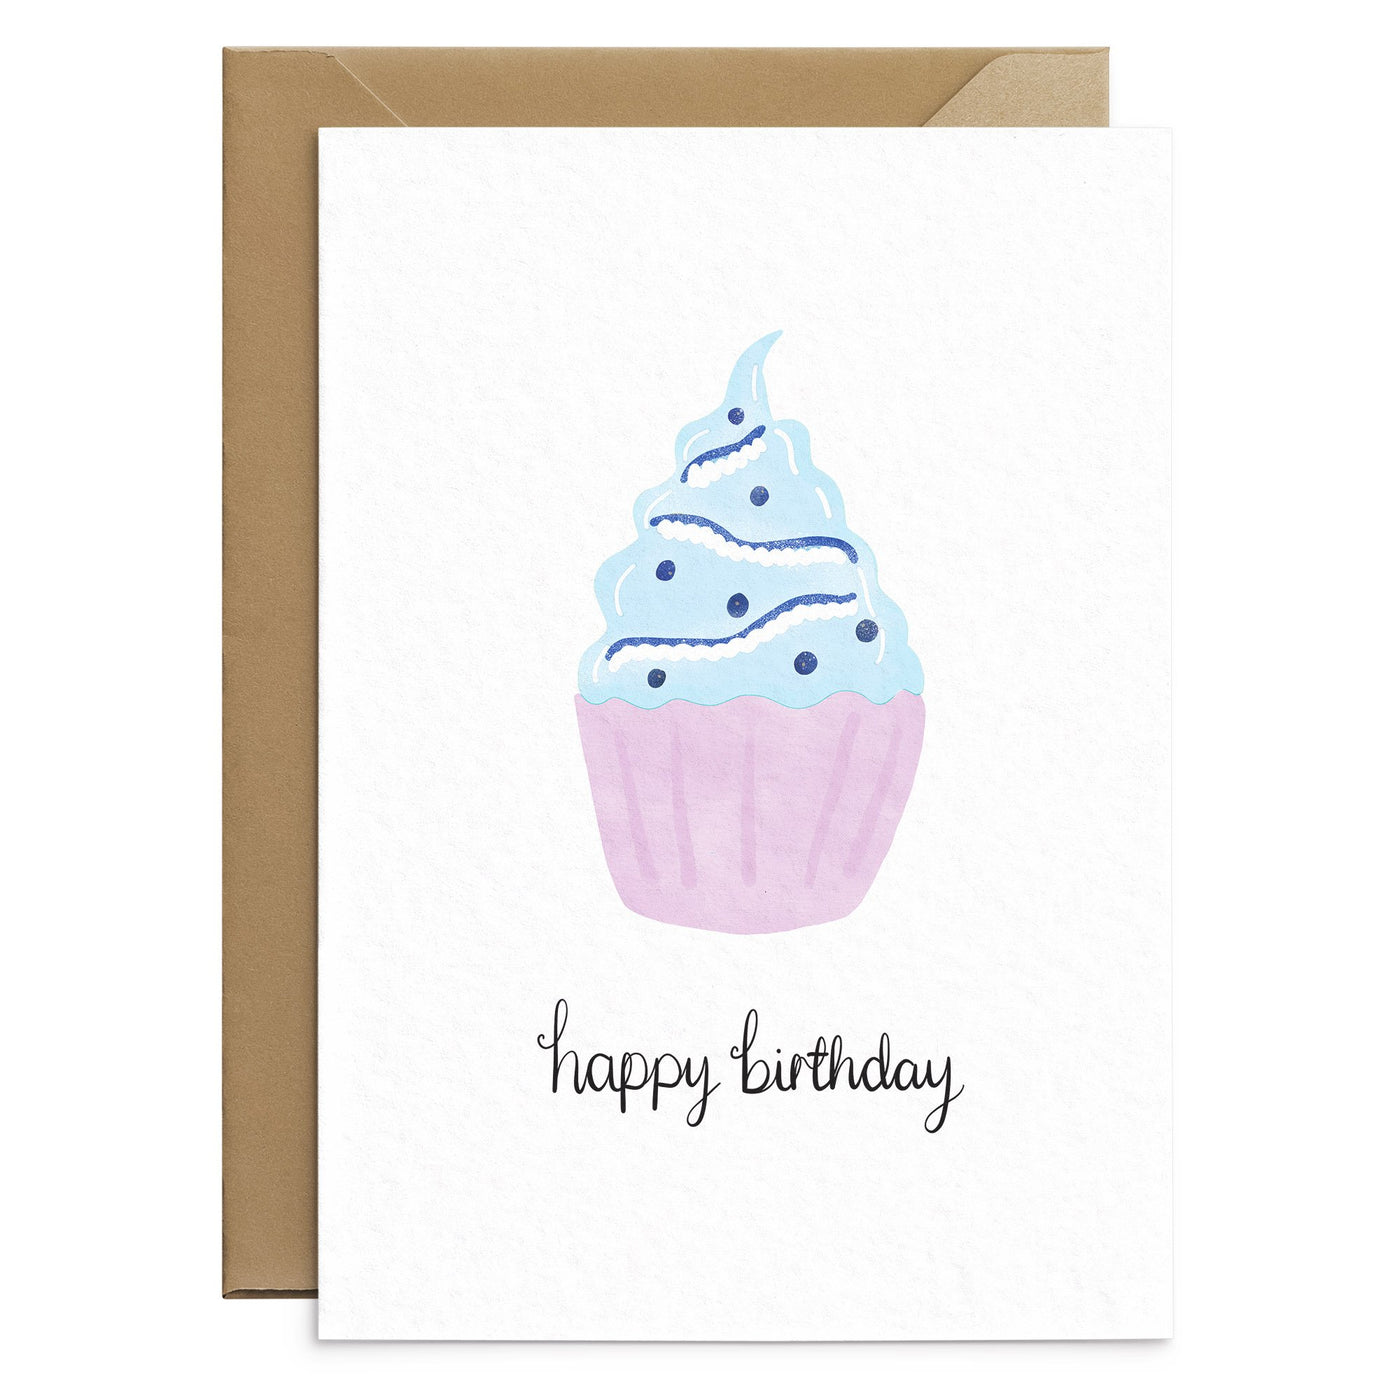 Blueberry Cupcake Birthday Card - Poppins & Co.